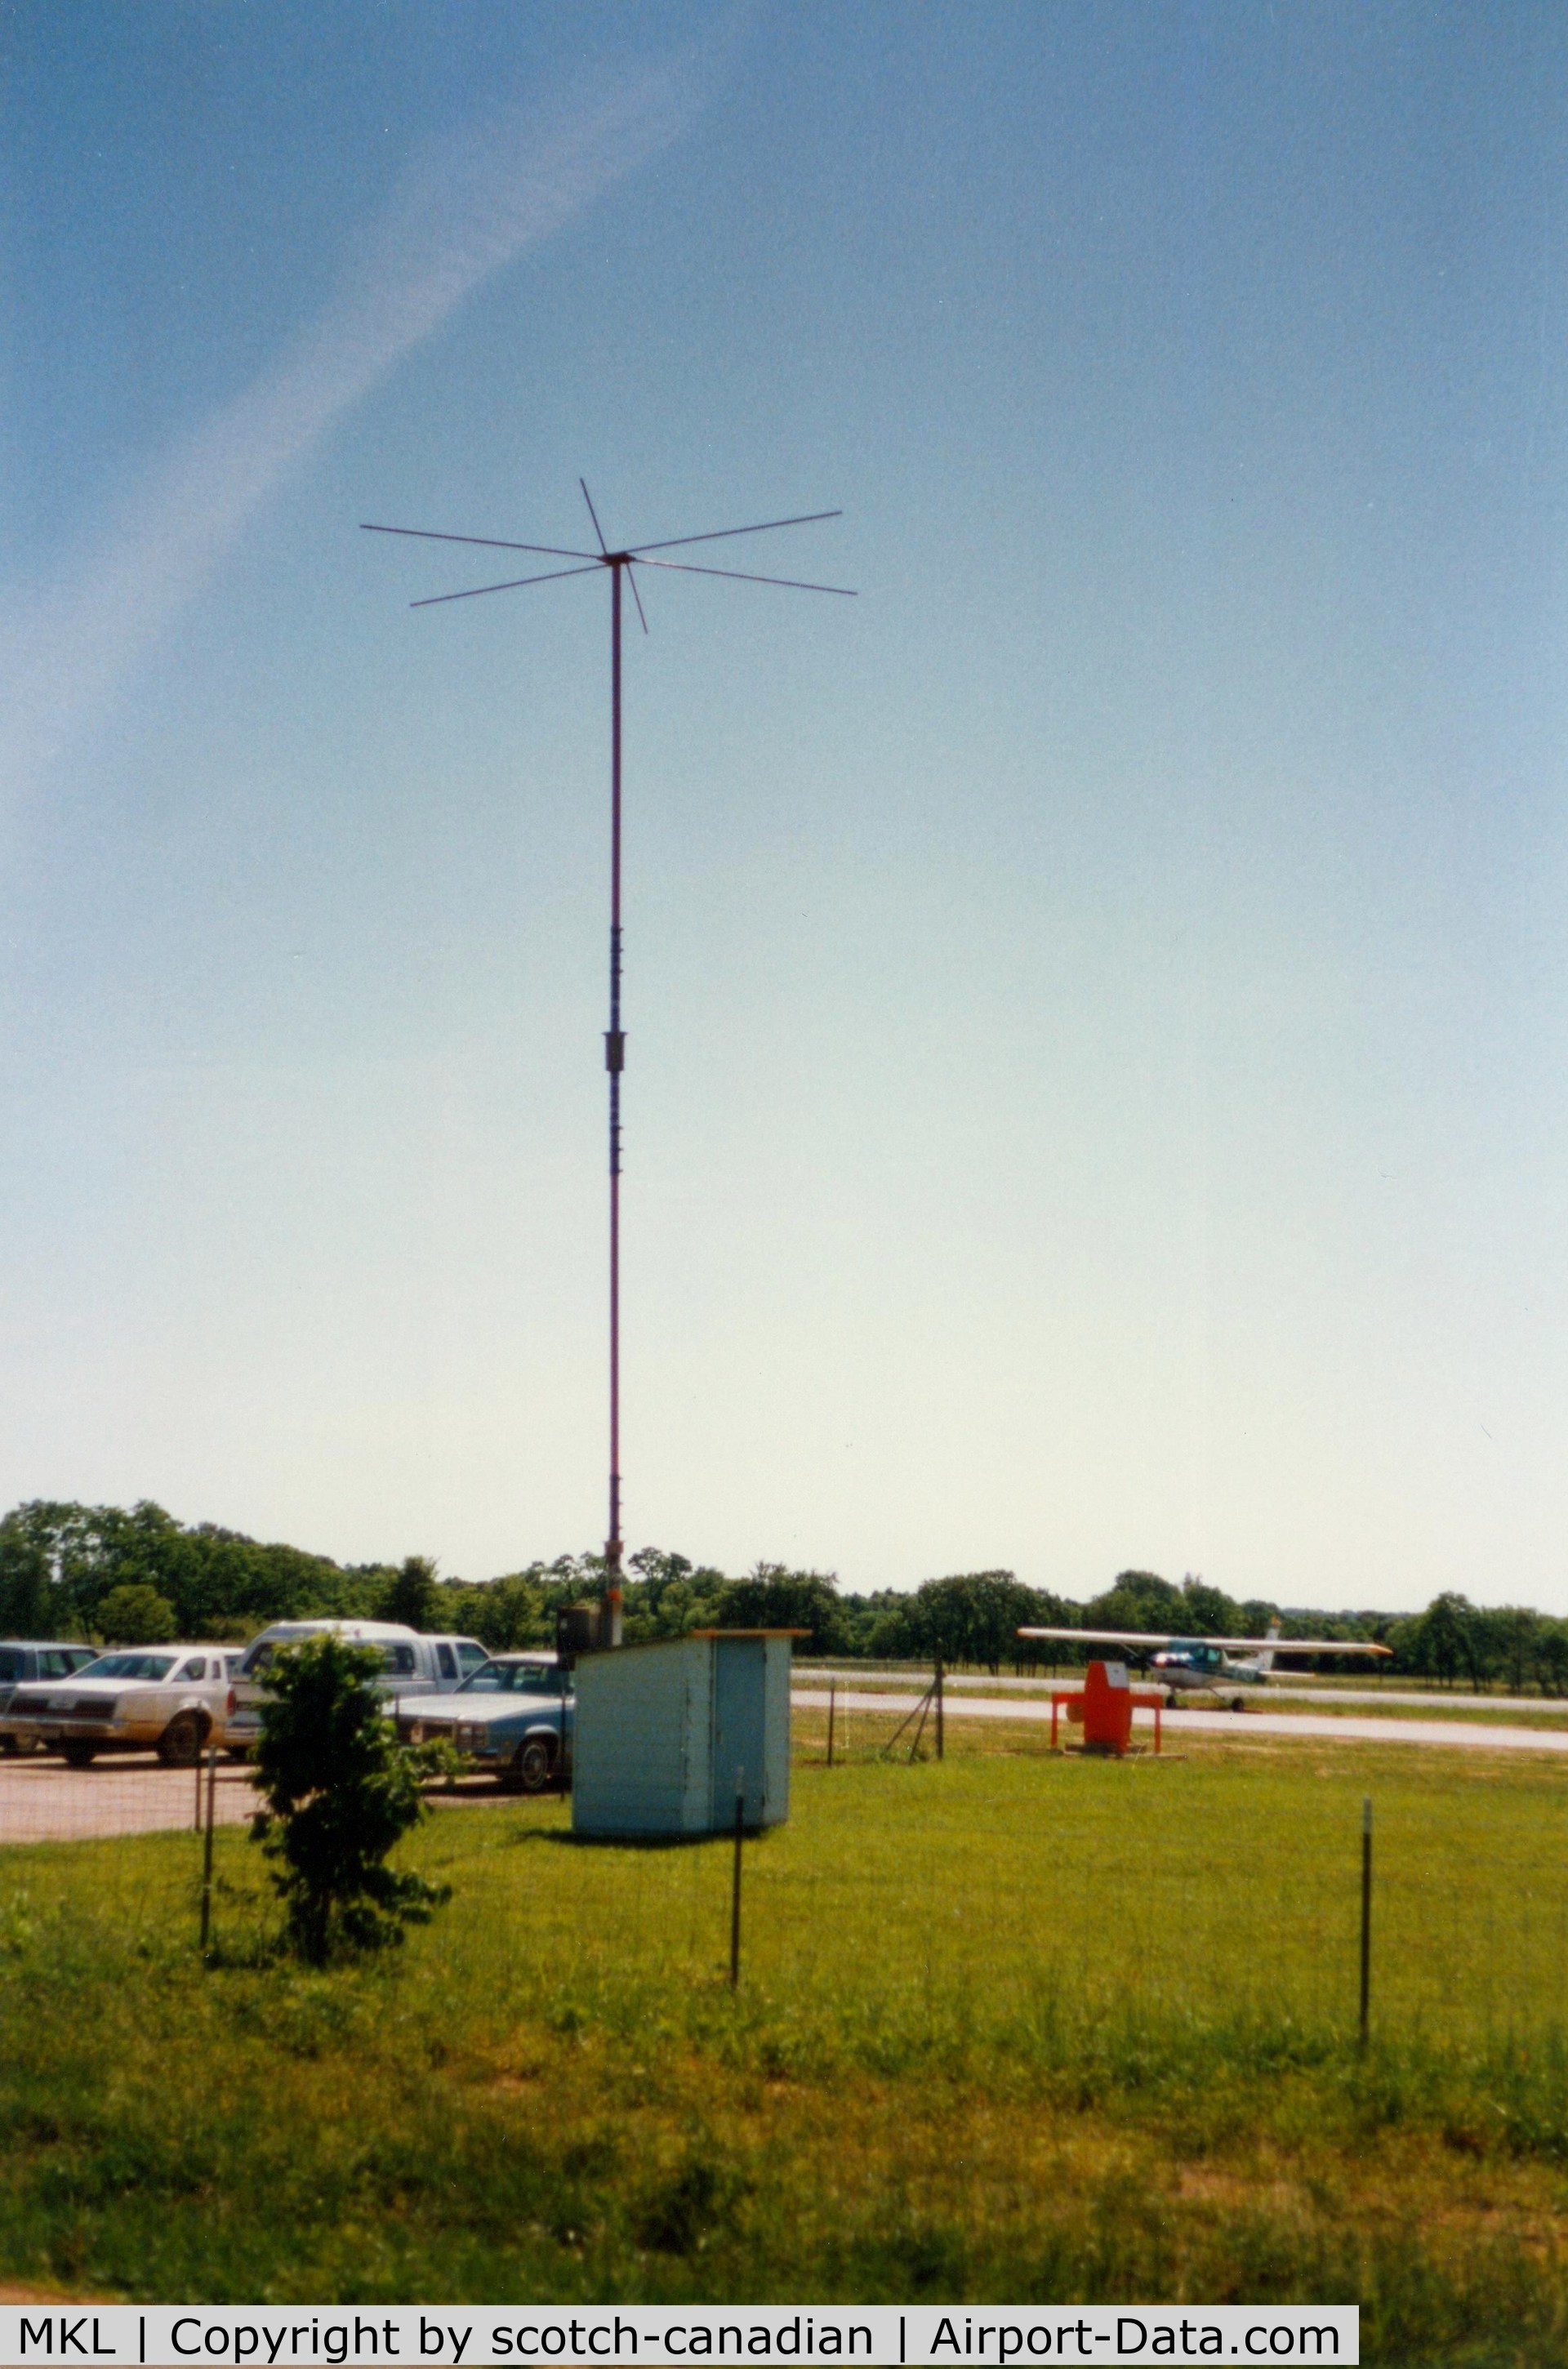 Mc Kellar-sipes Regional Airport (MKL) - Non-Directional Beacon (NDB) at McKellar-Sipes Regional Airport, Jackson, TN - May 1990